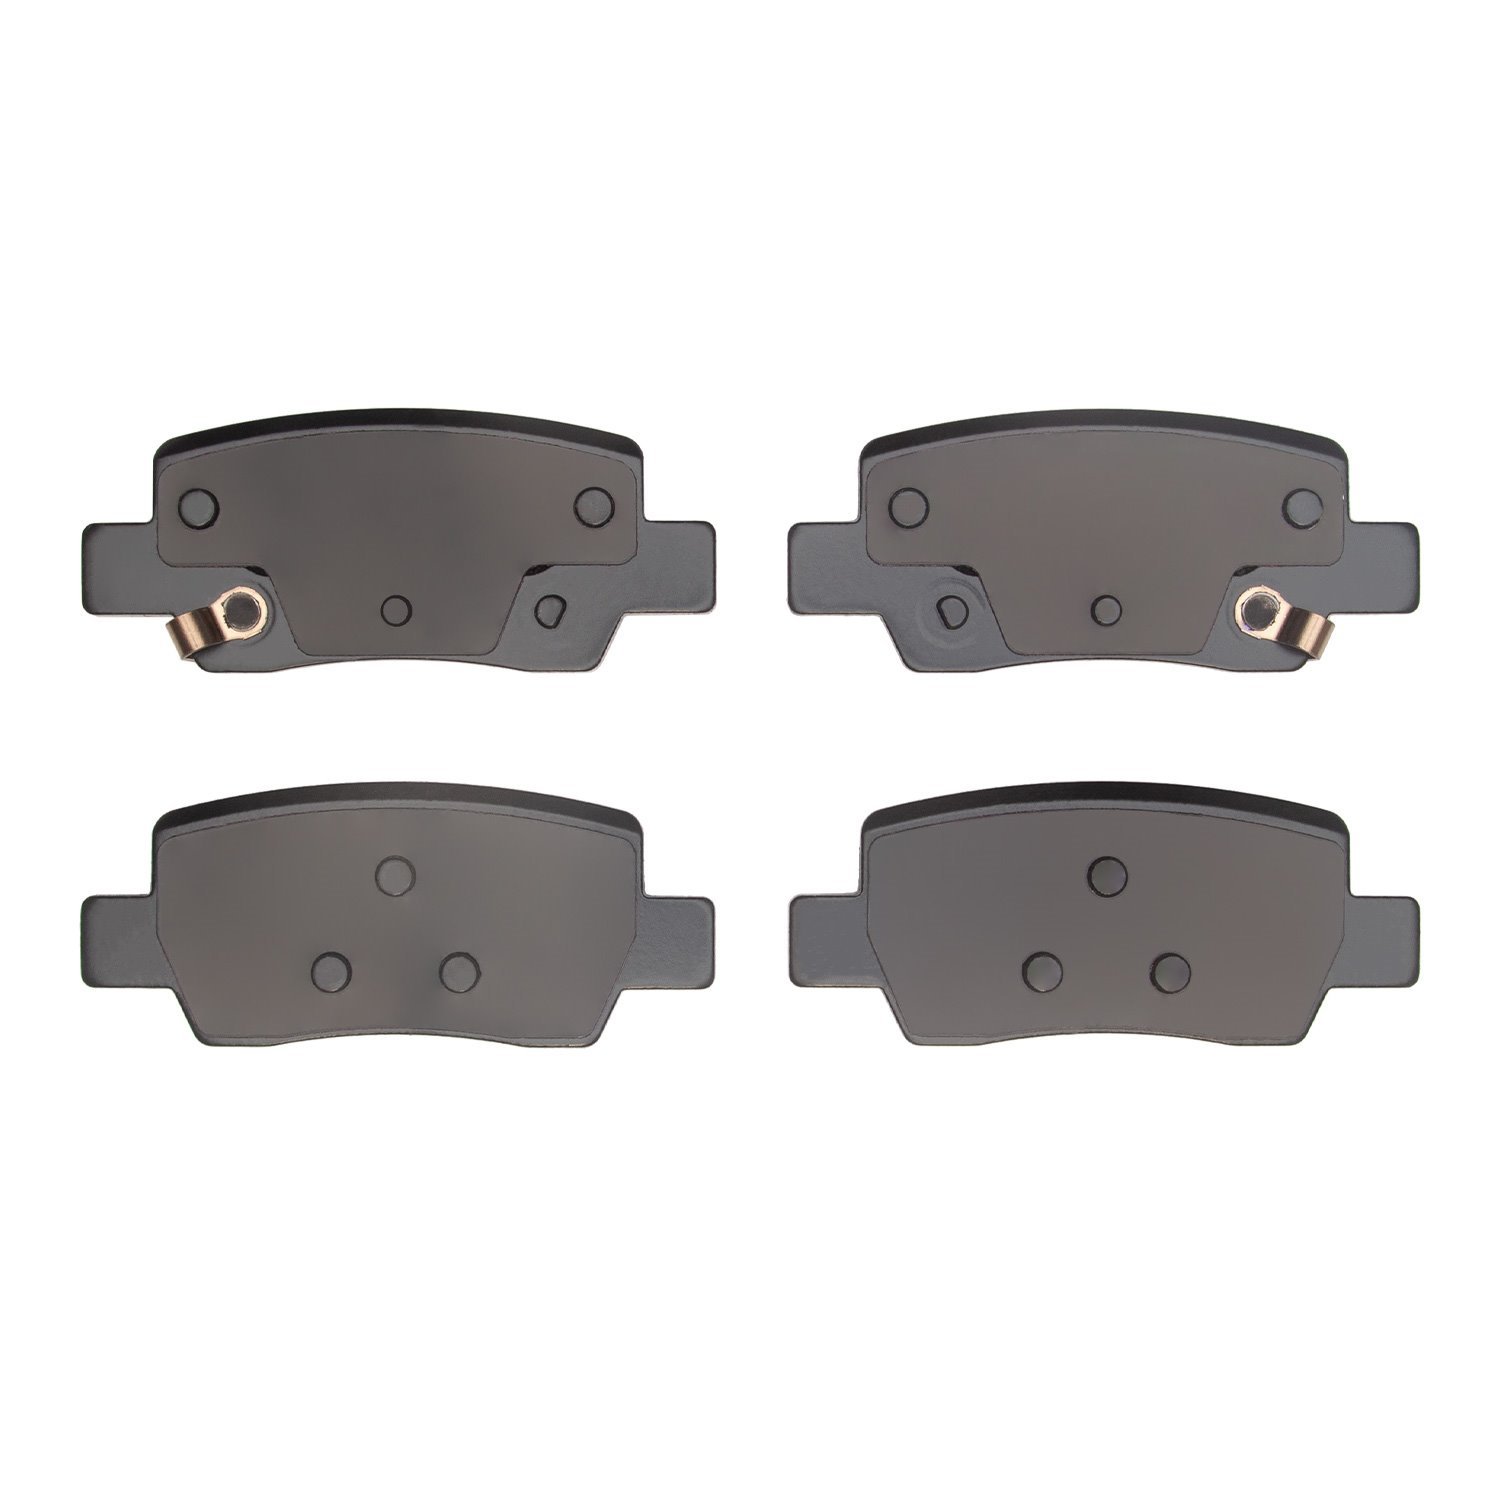 1551-2373-00 5000 Advanced Ceramic Brake Pads, Fits Select Kia/Hyundai/Genesis, Position: Rear